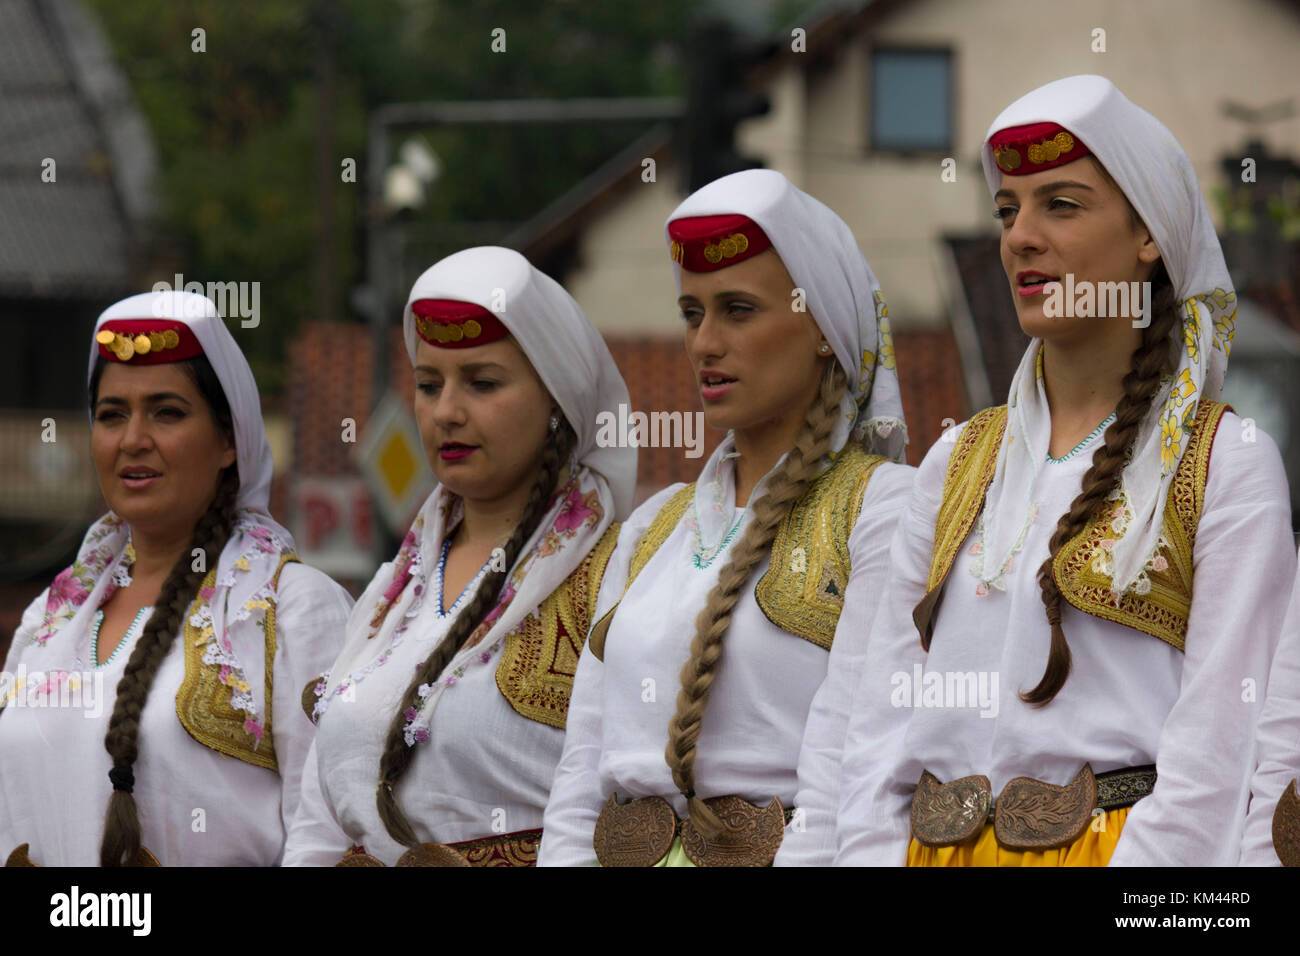 SARAJEVO, BOSNIA AND HERZEGOVINA - AUGUST 20 2017: Group of traditional ...